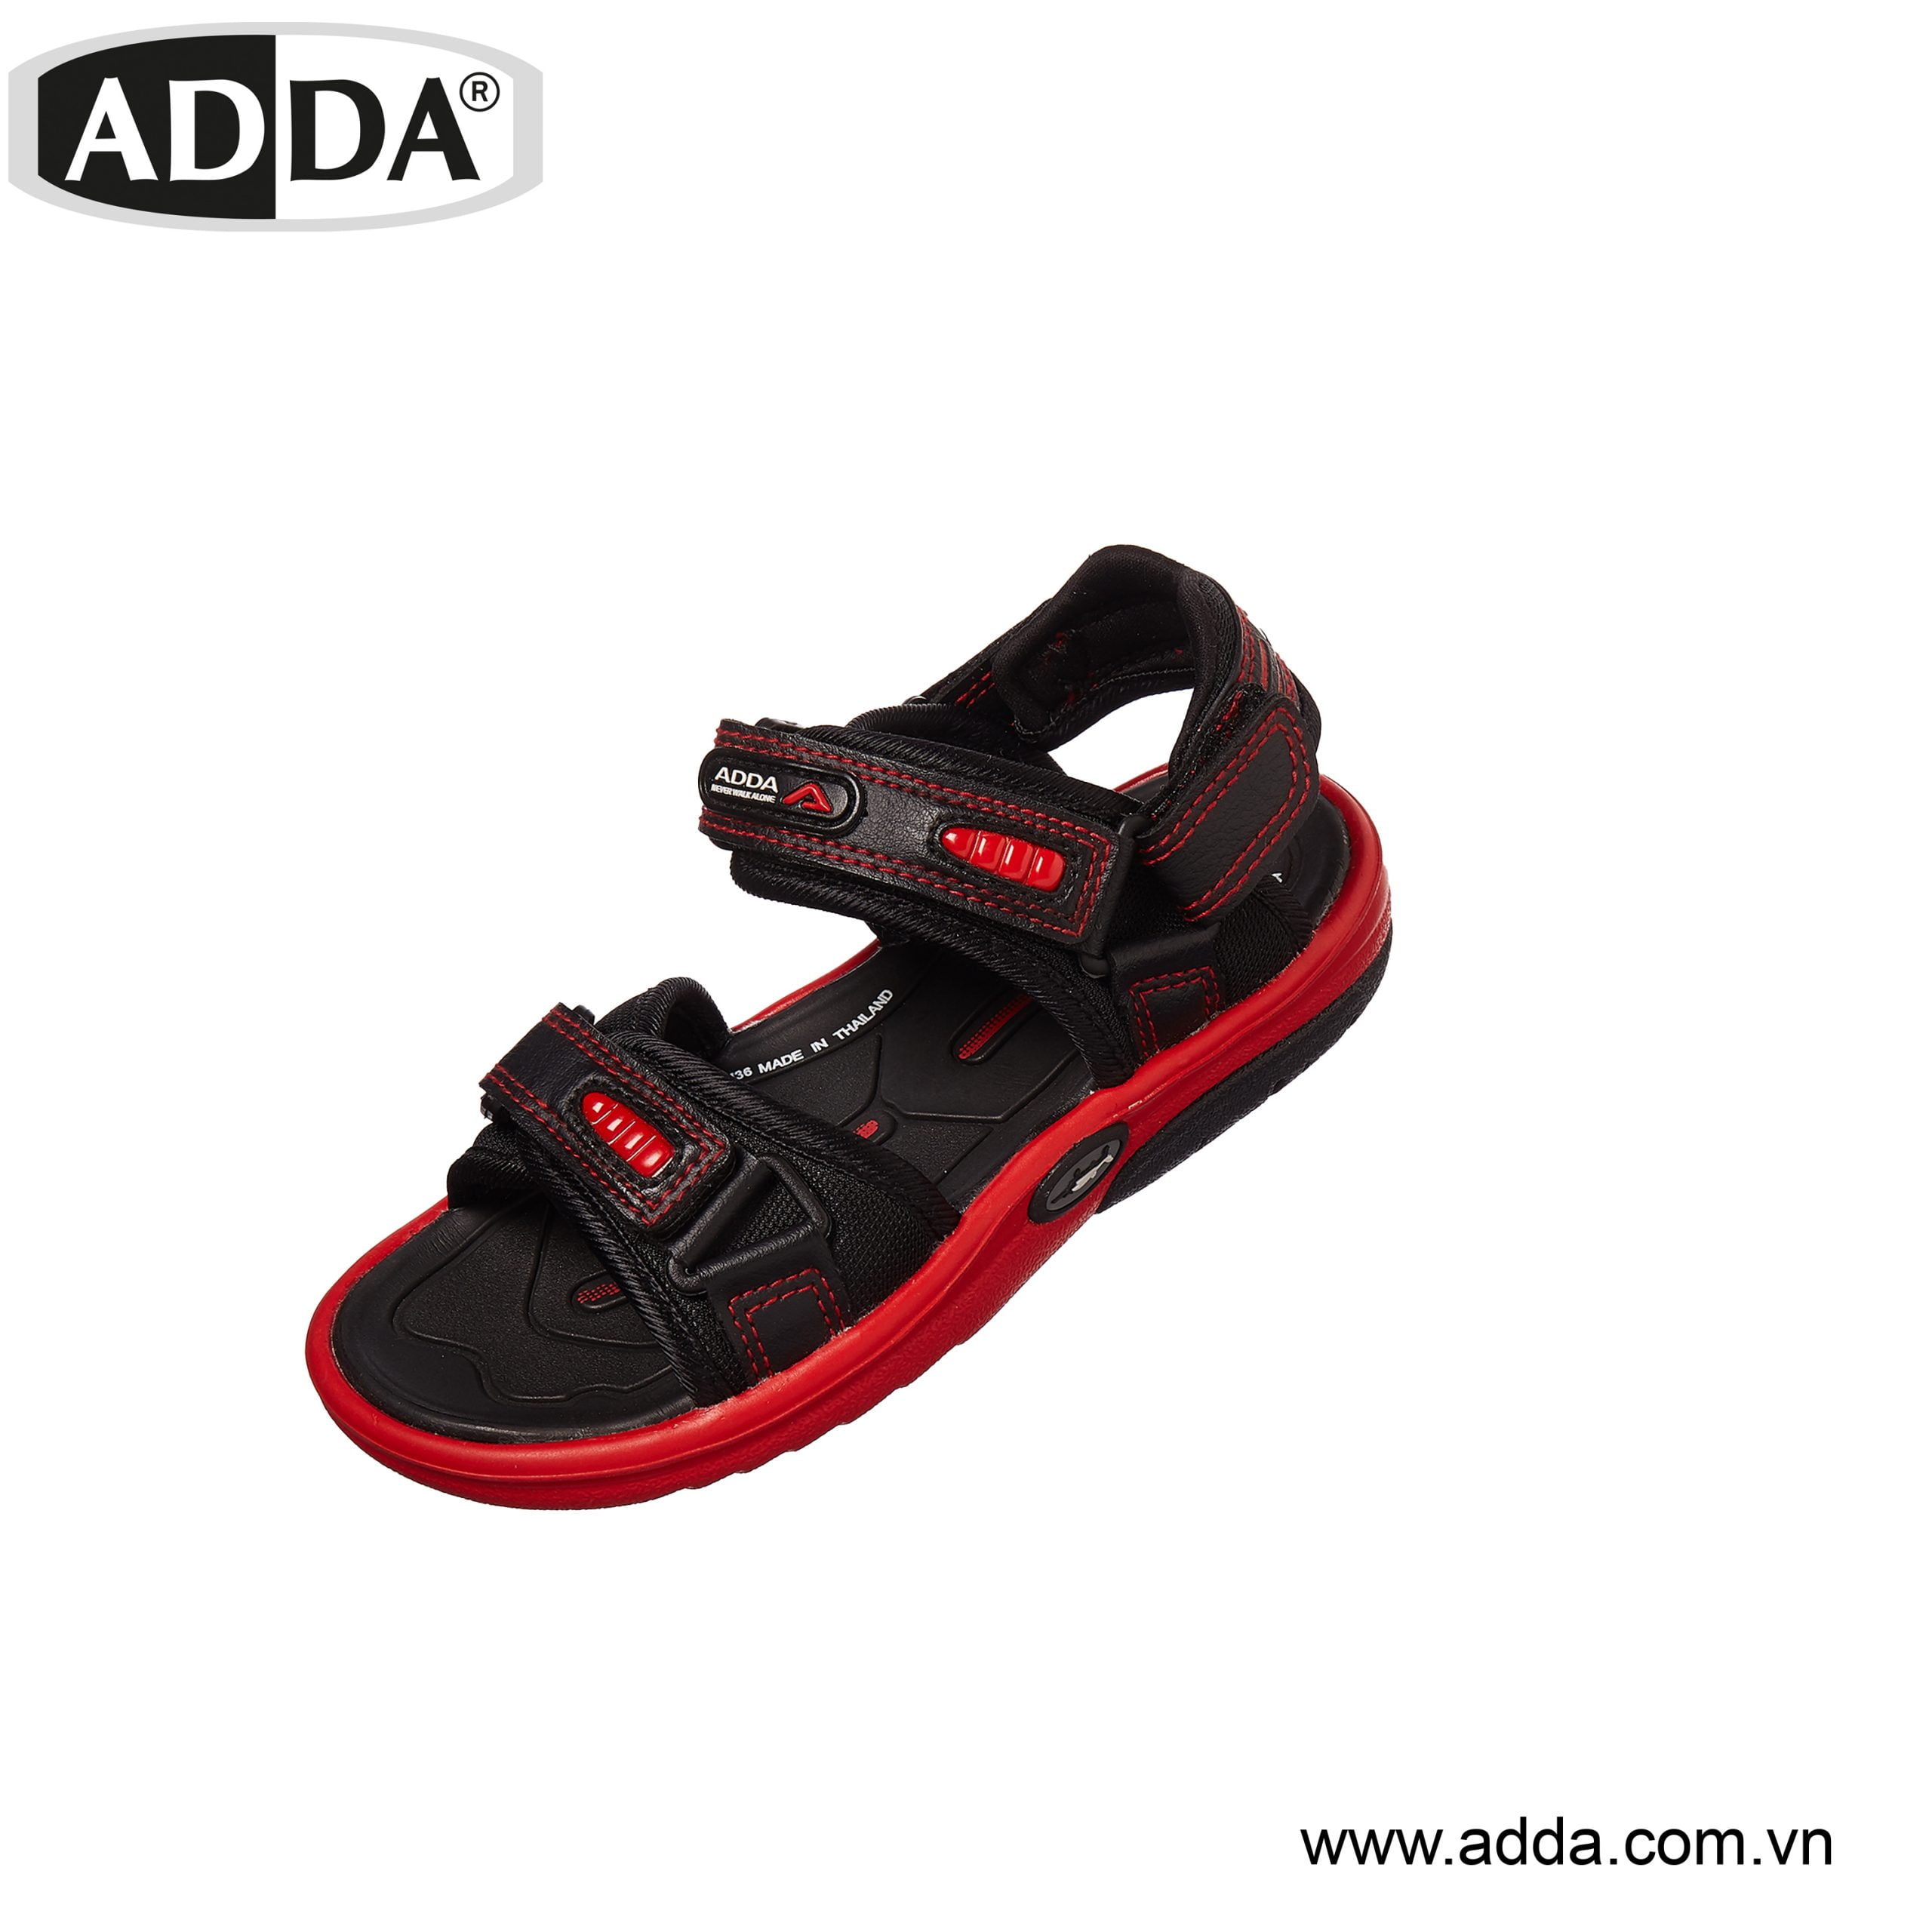 ADDA FOOTWEAR (THAILAND) CO., LTD. | LinkedIn